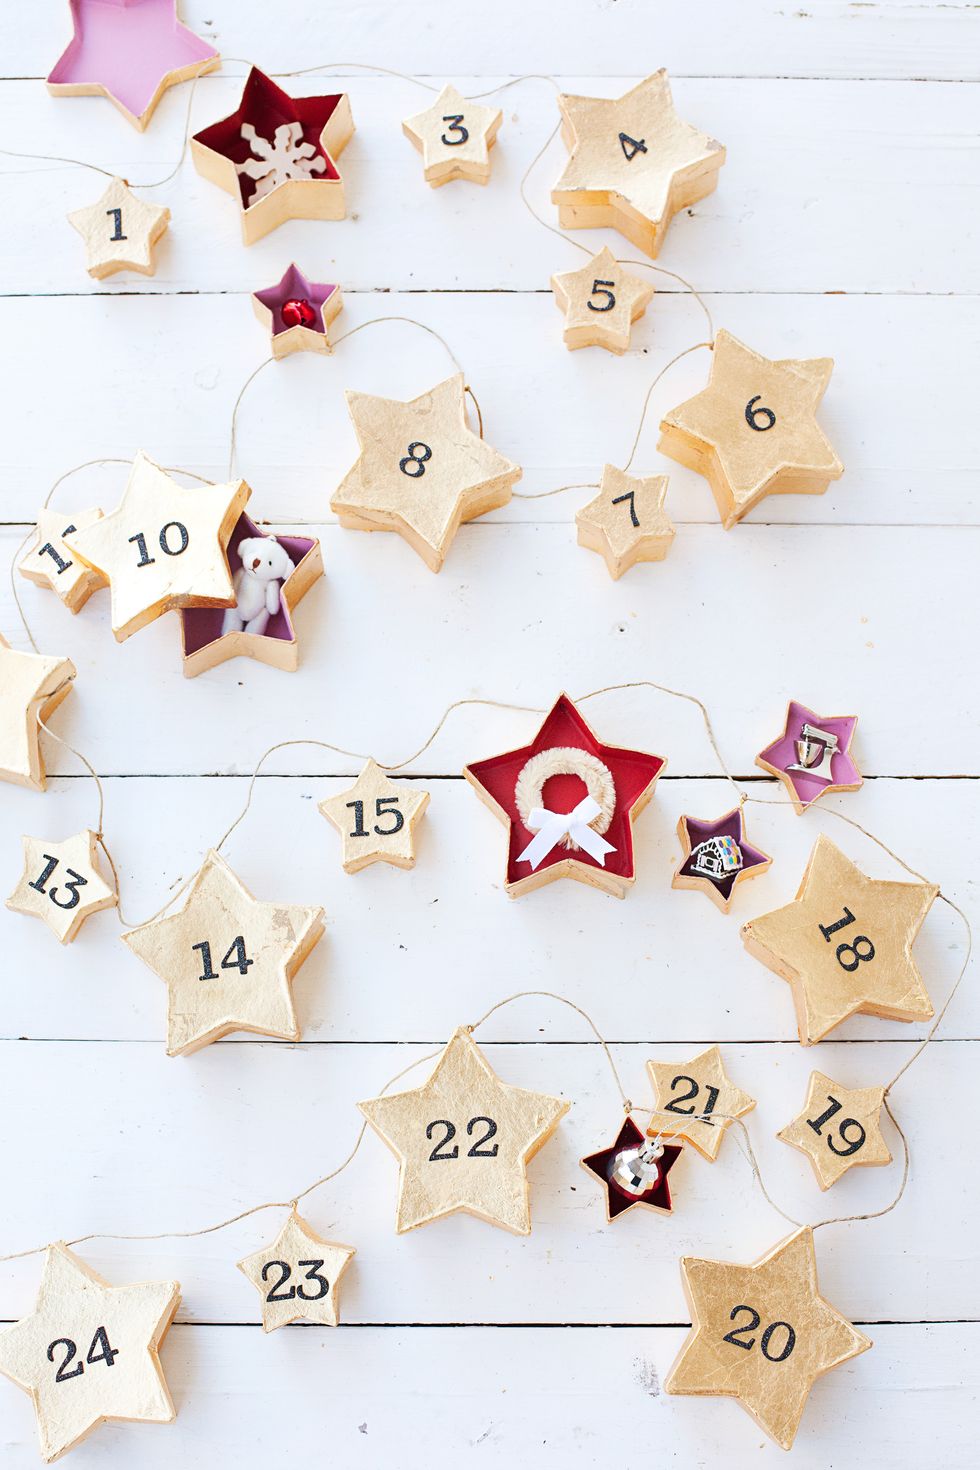 39 DIY Advent Calendar Ideas - How to Make an Advent Calendar